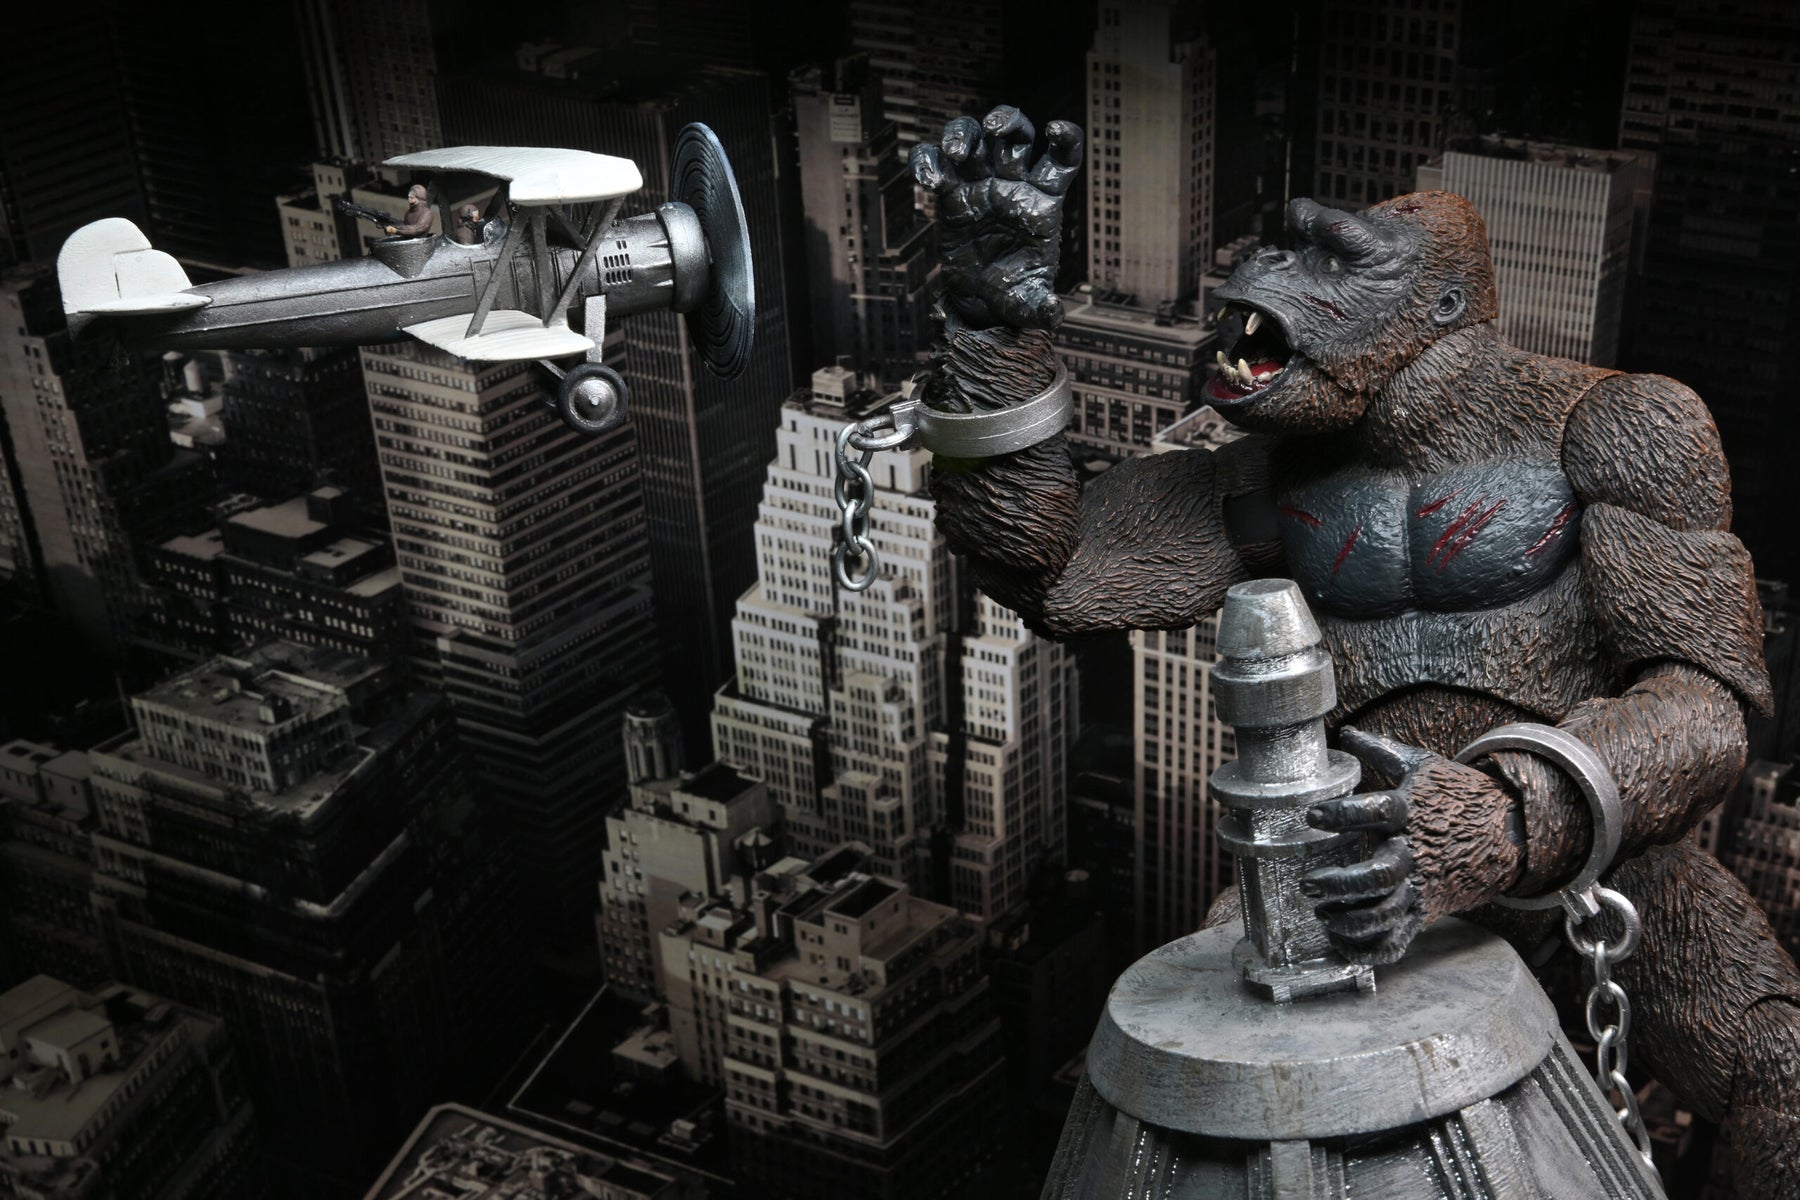 NECA - King Kong - Ultimate Concrete Jungle 7" Action Figure - Zlc Collectibles